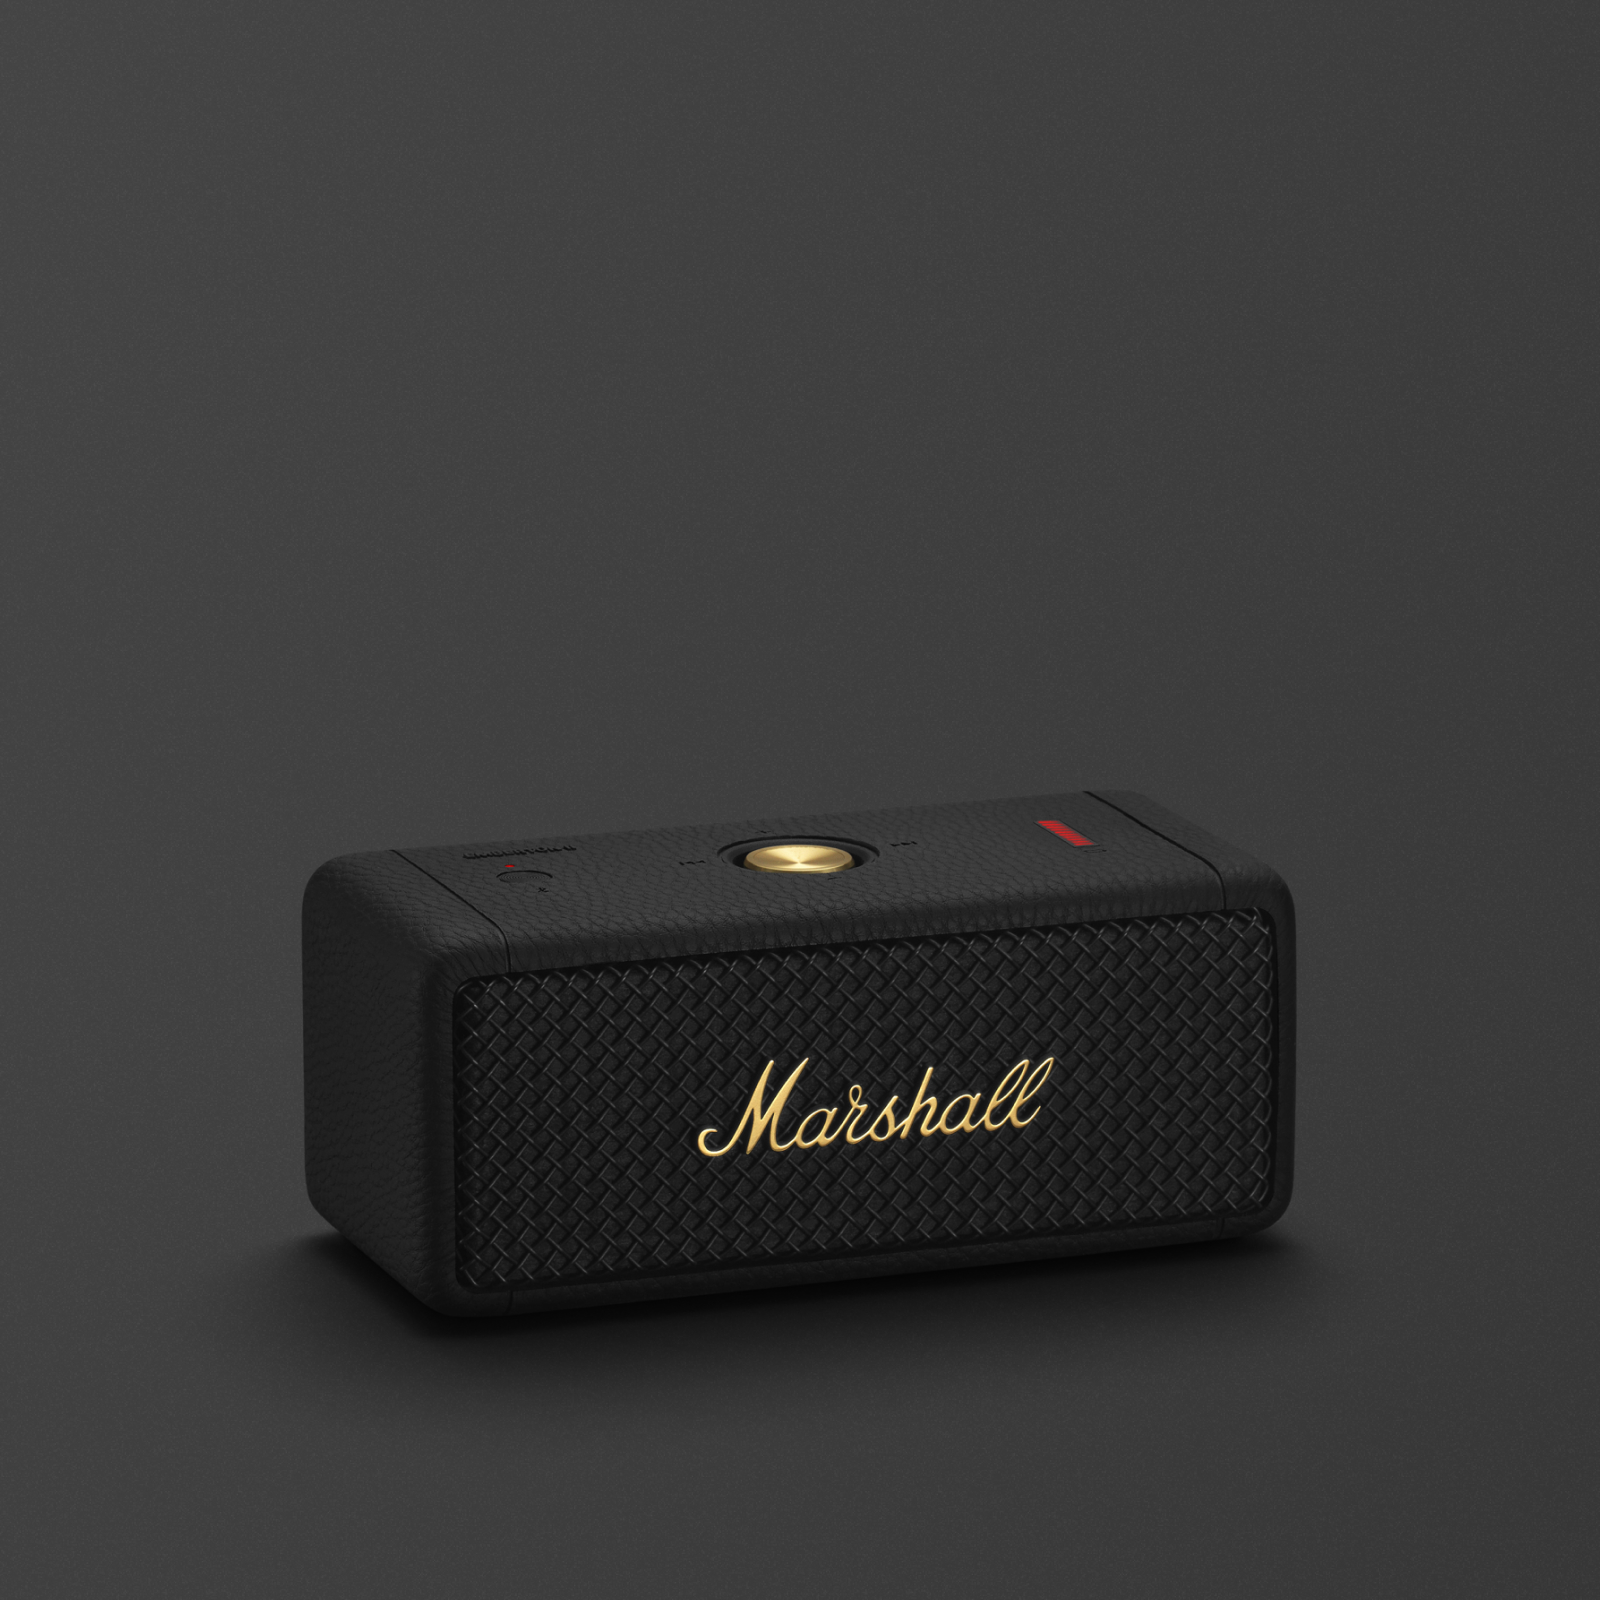 The Marshall EMBERTON II BLACK AND BRASS is a sleek black portable Bluetooth speaker.